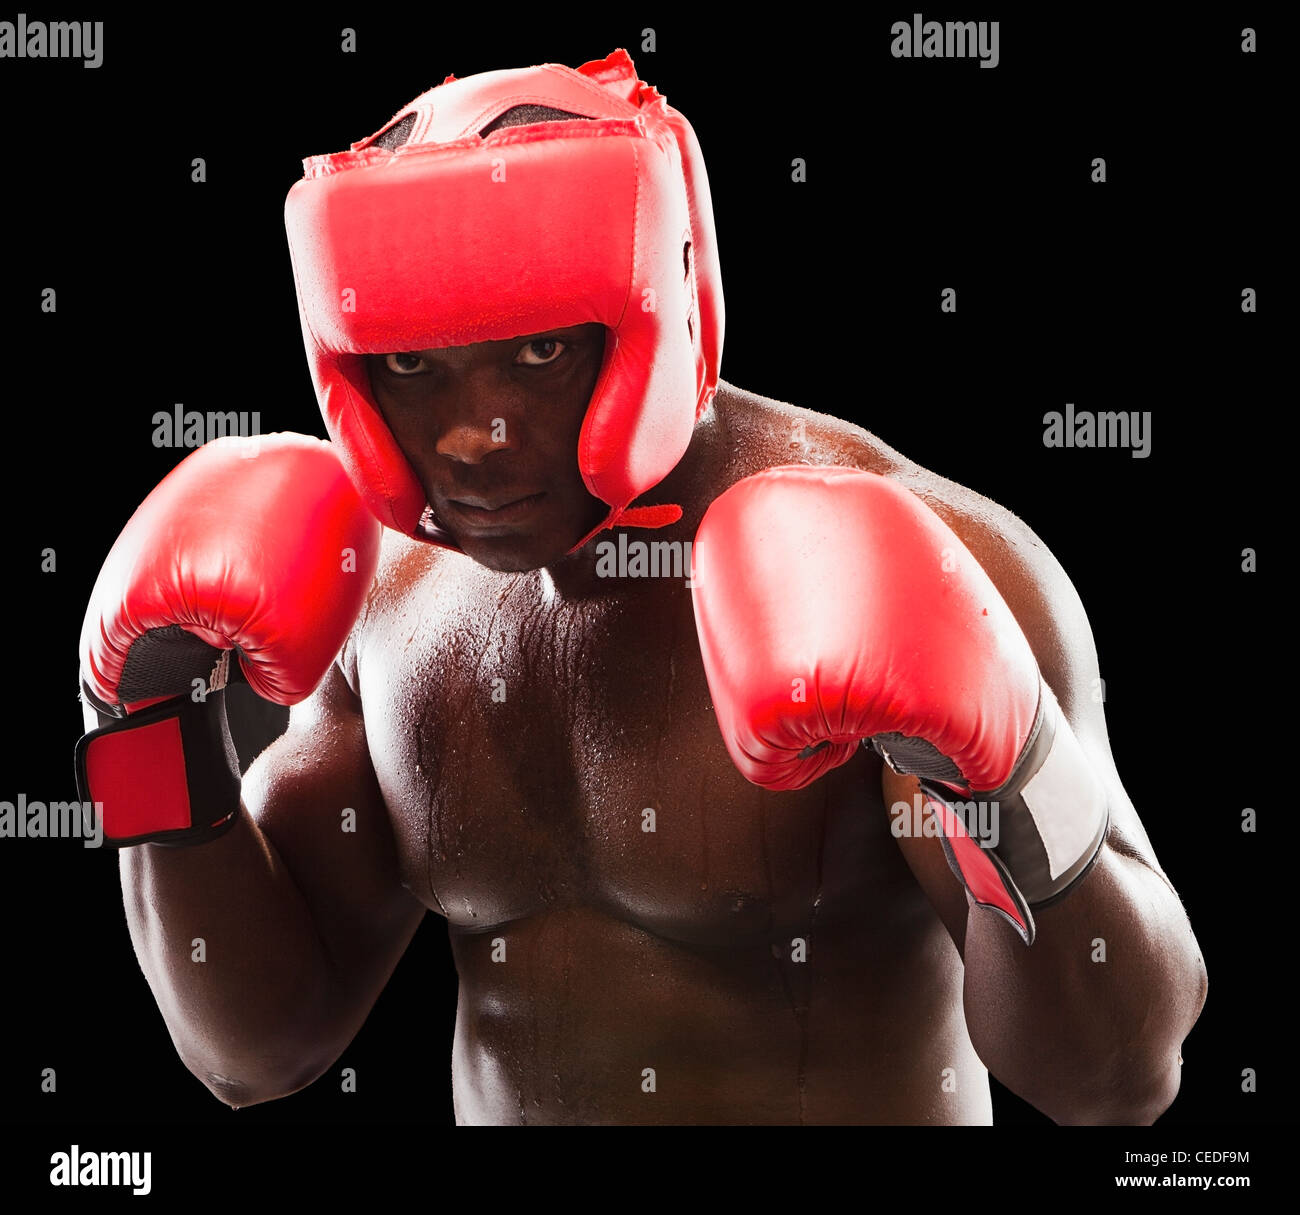 Boxeador afroamericano en indumentaria de protección Fotografía de stock -